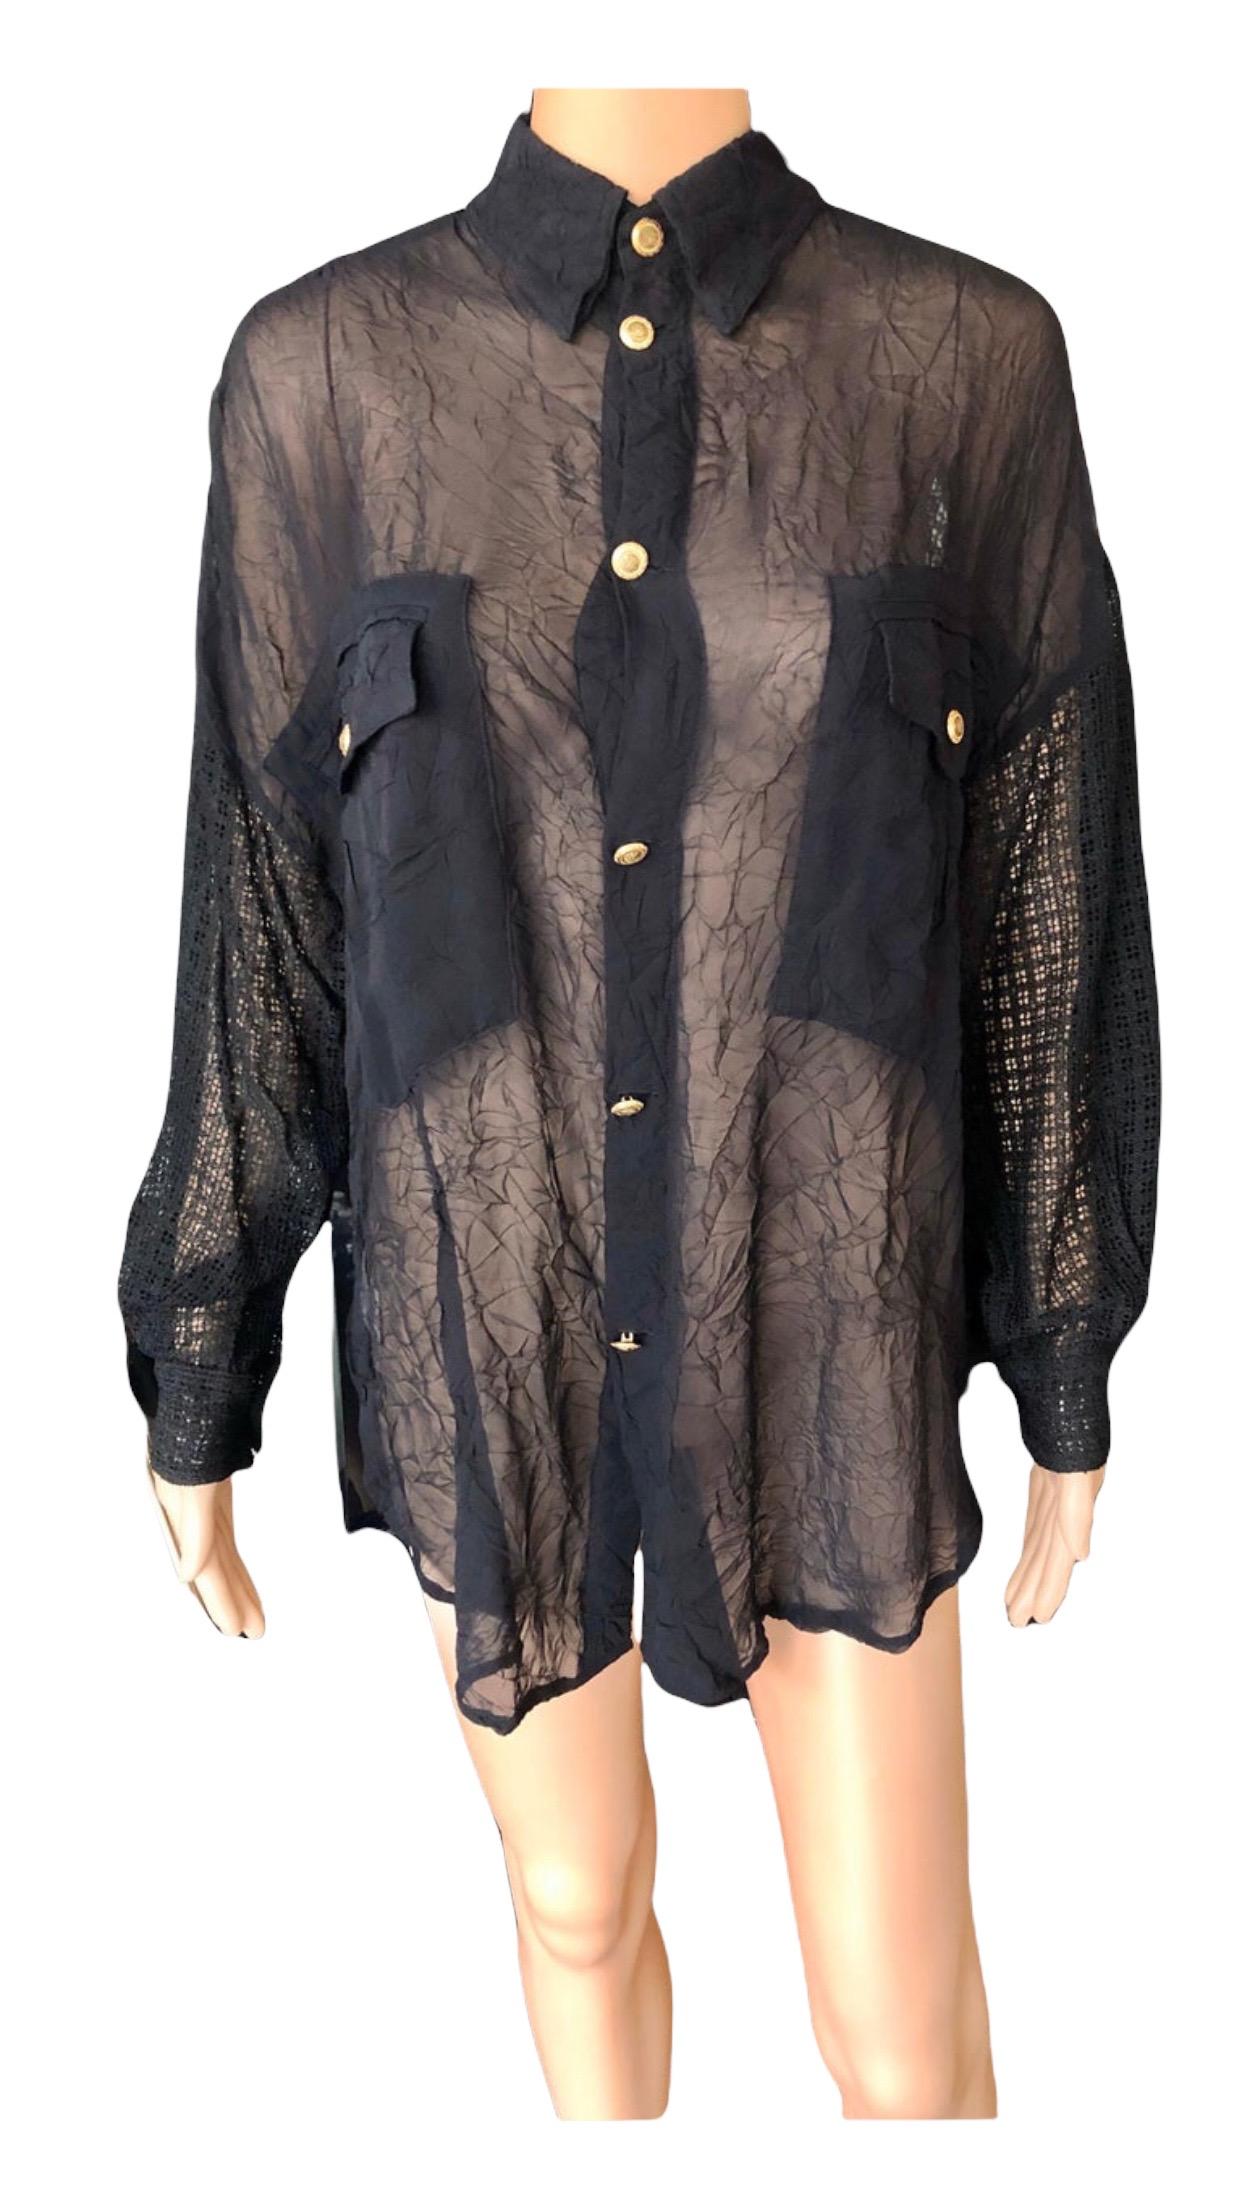 Gianni Versace c. 1990 Vintage Sheer Silk Mesh Black Shirt Blouse Top For Sale 9